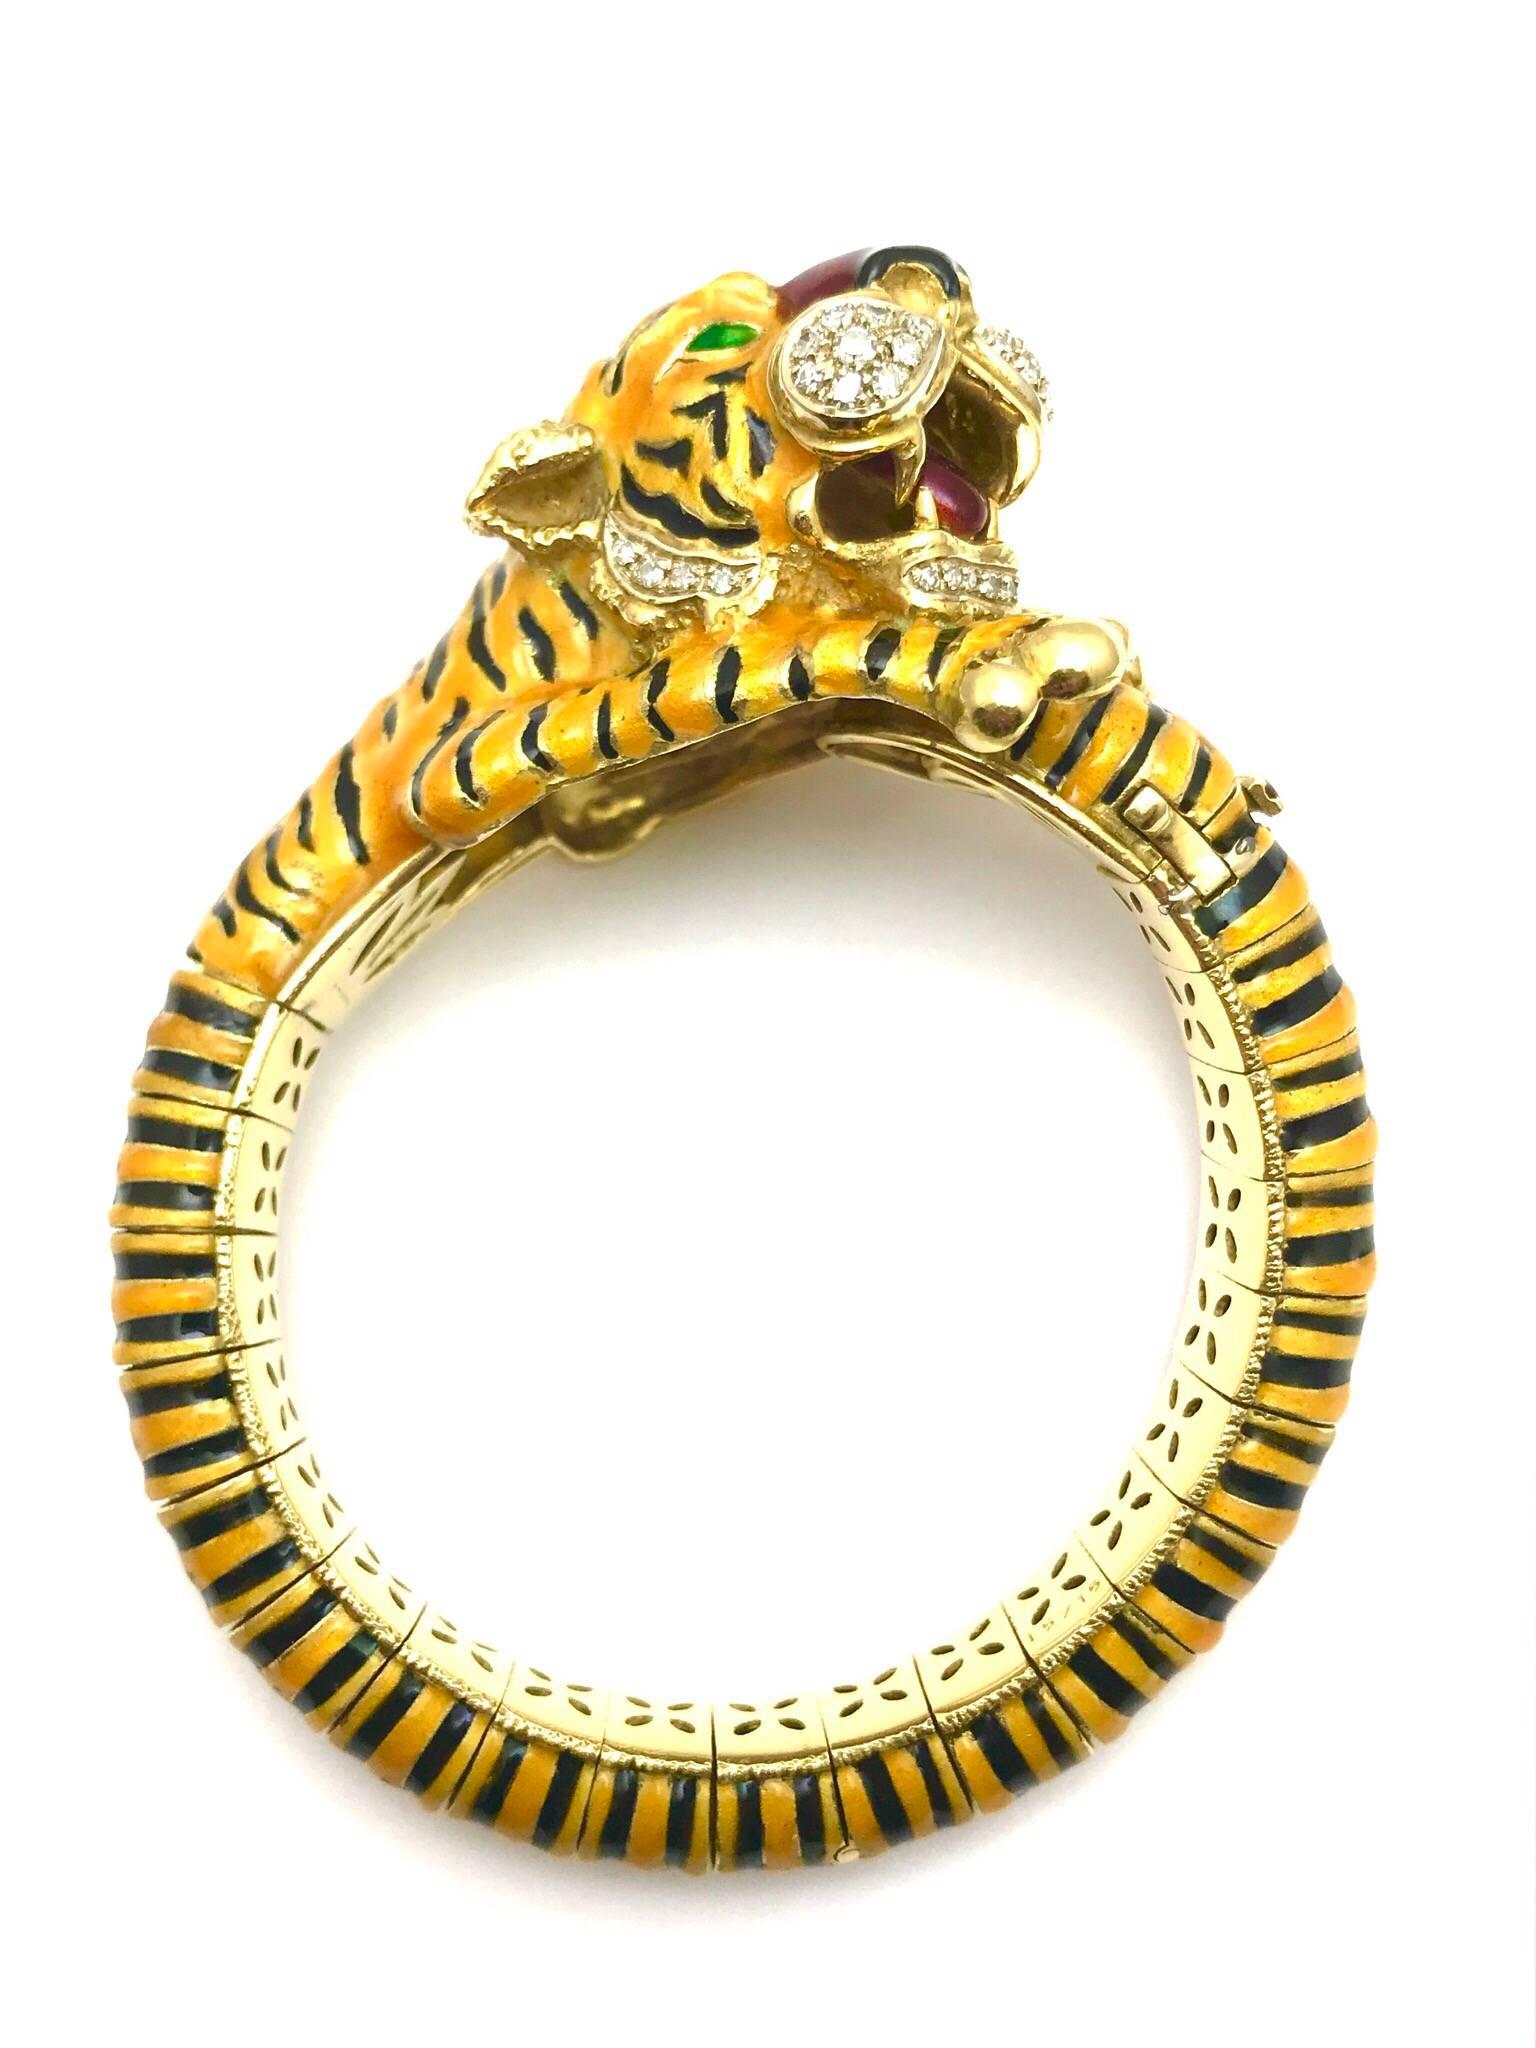 Cartier Diamond and Enamel Yellow Gold Bangle Tiger Bracelet 1